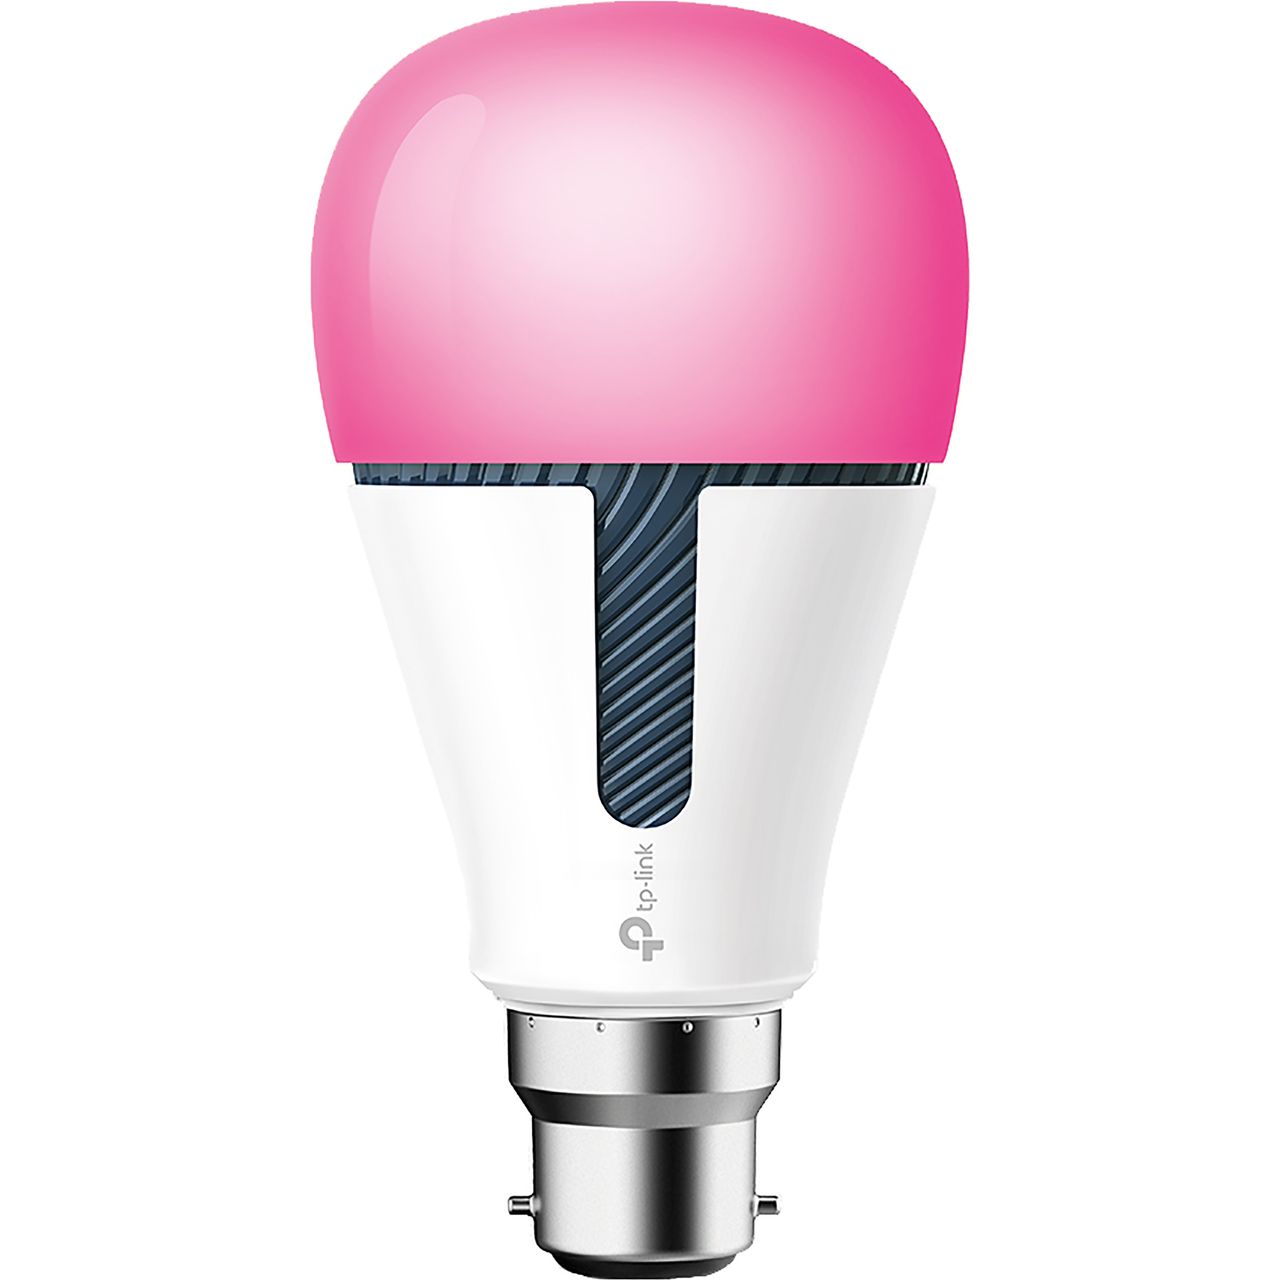 TP-Link Kasa KL130B B22 Smart Light Bulb Review